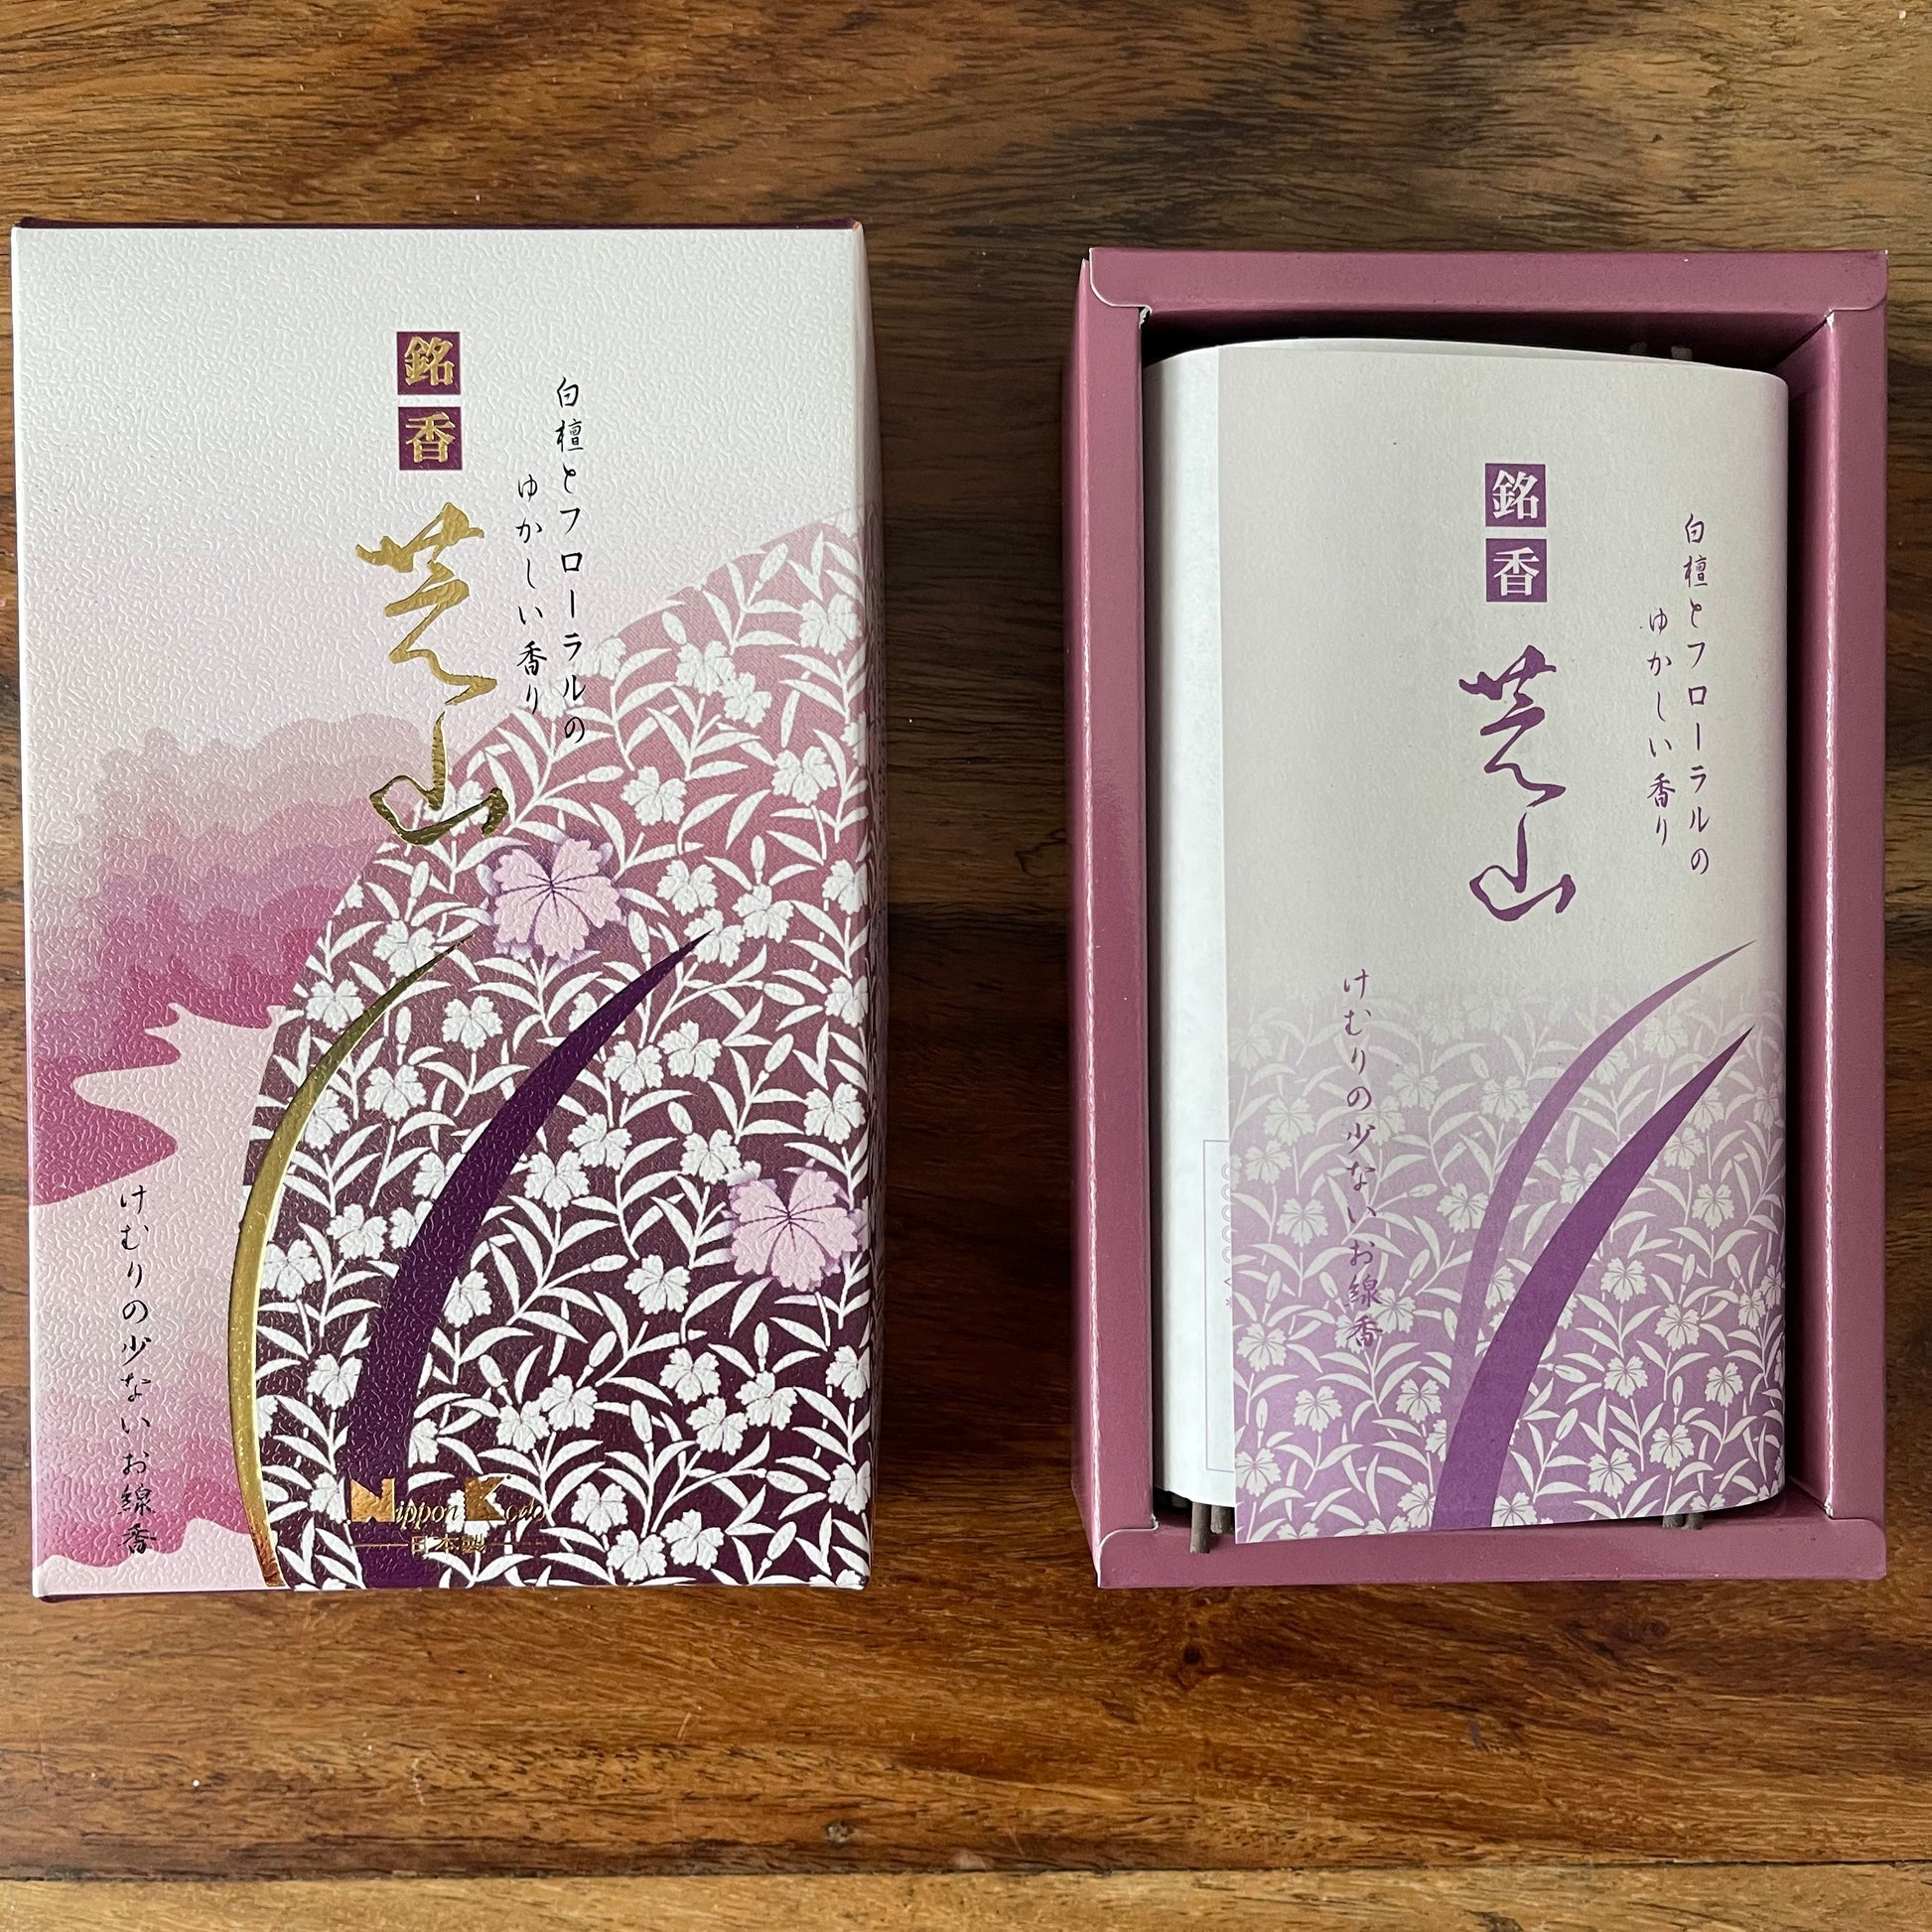 Meikoh Shibayama Incense | High quality Japanese Incense sticks